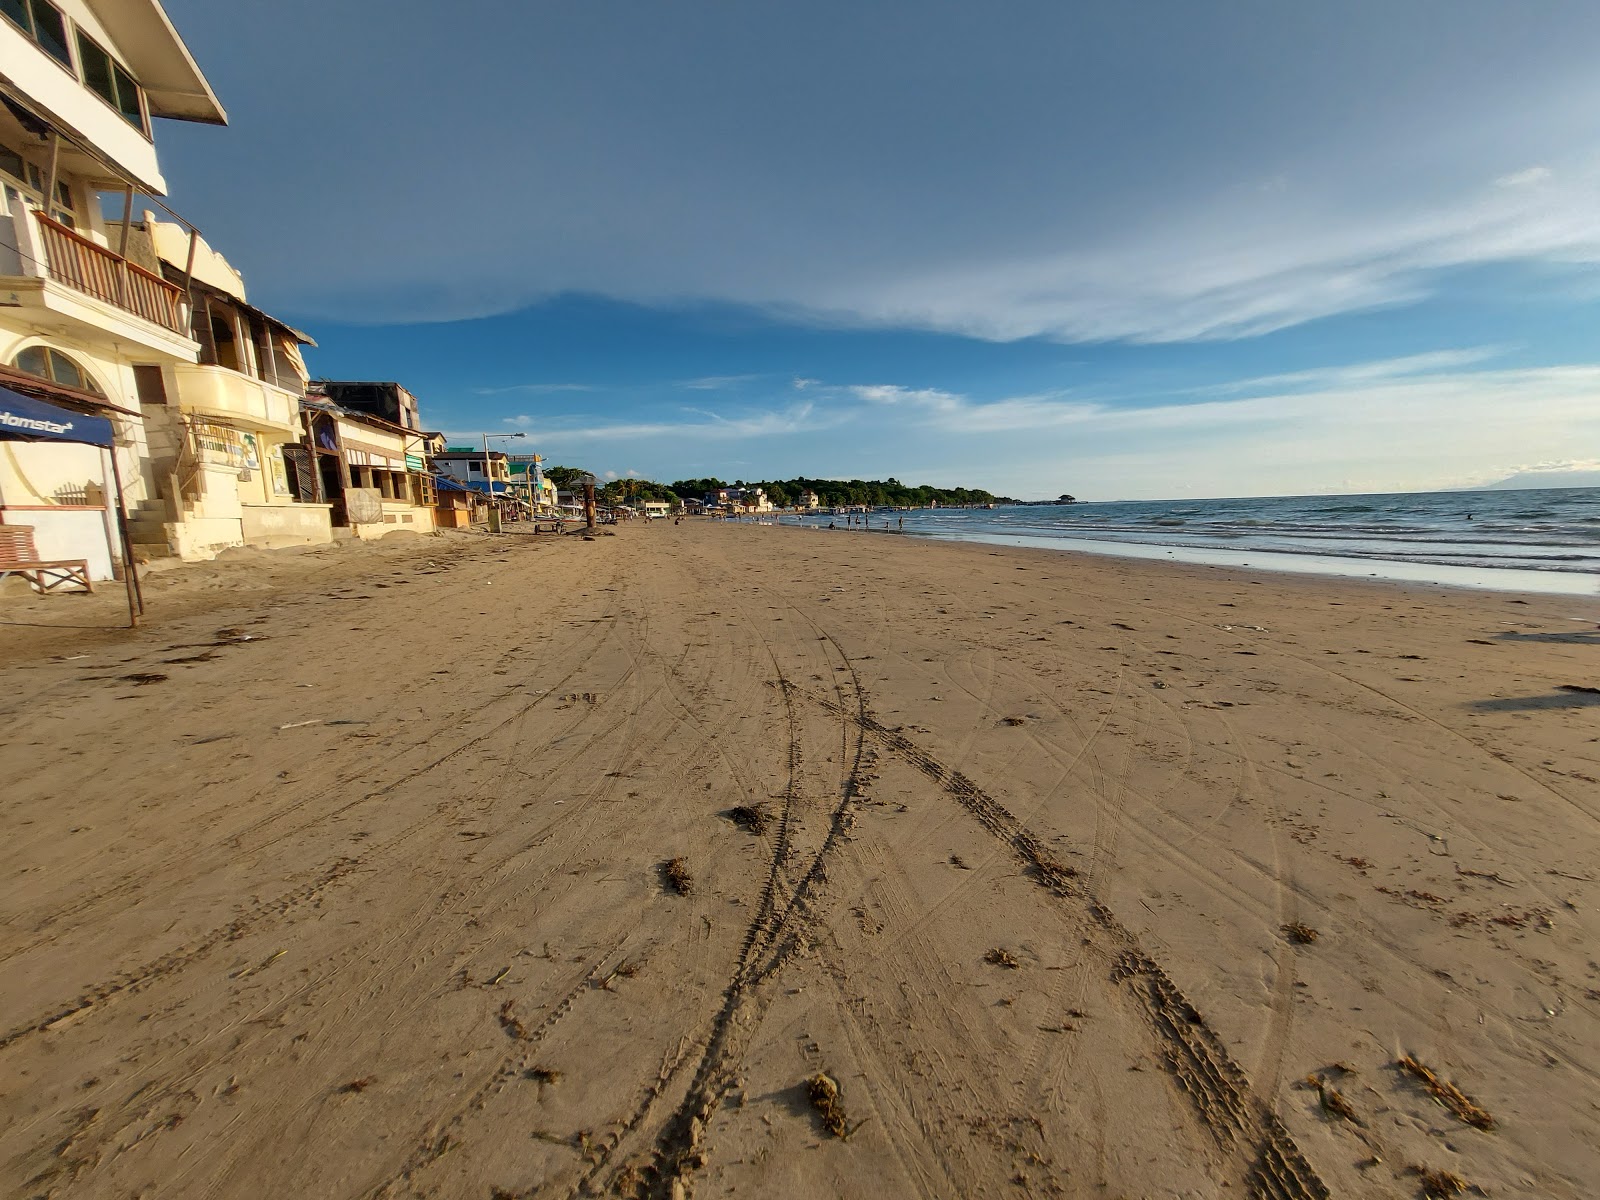 Lian batangas beach的照片 具有部分干净级别的清洁度